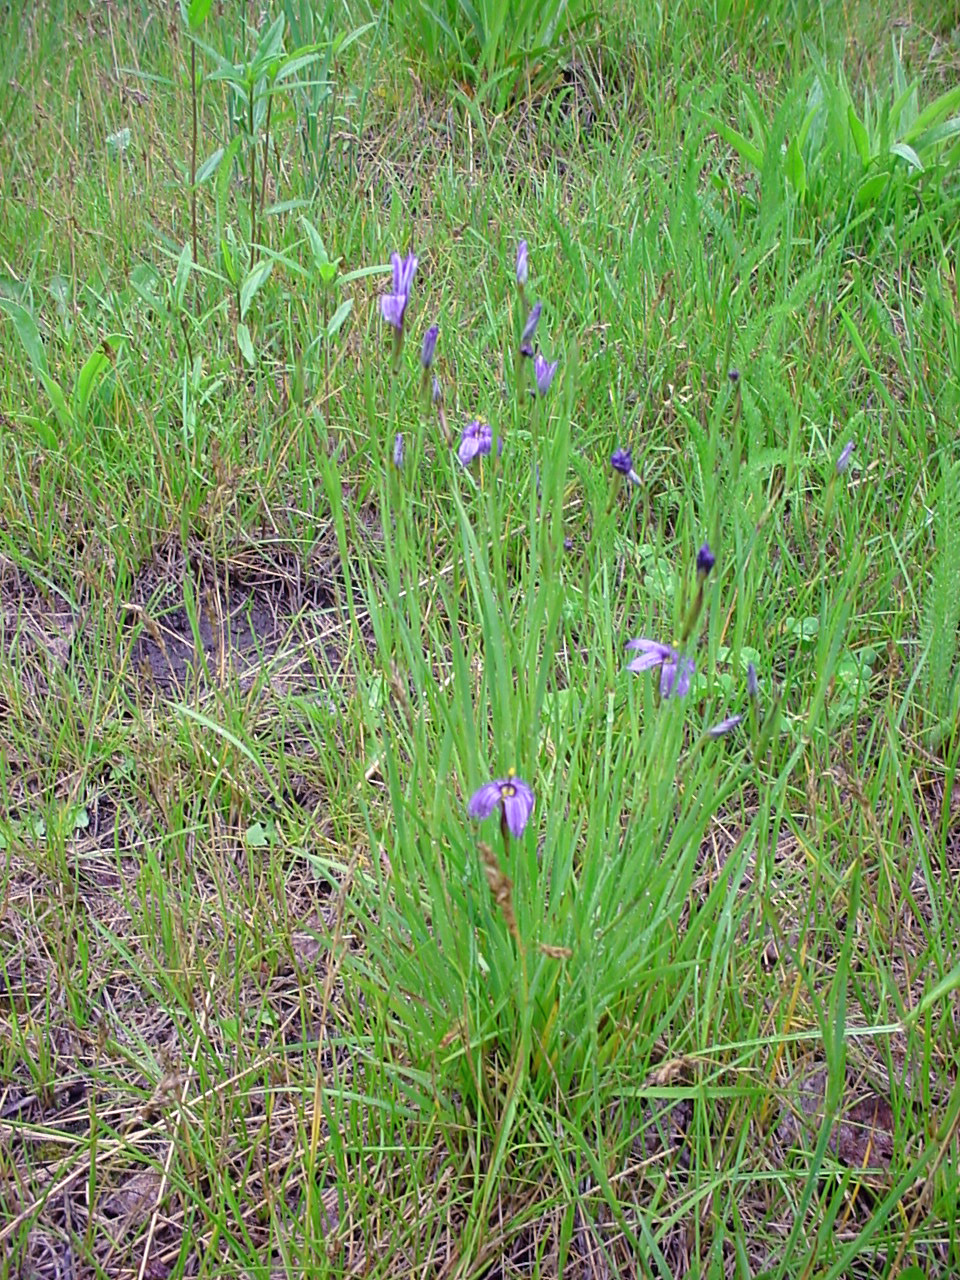 Sisyrinchium demissum, showing blue/purple flowers and grasslike growth habit